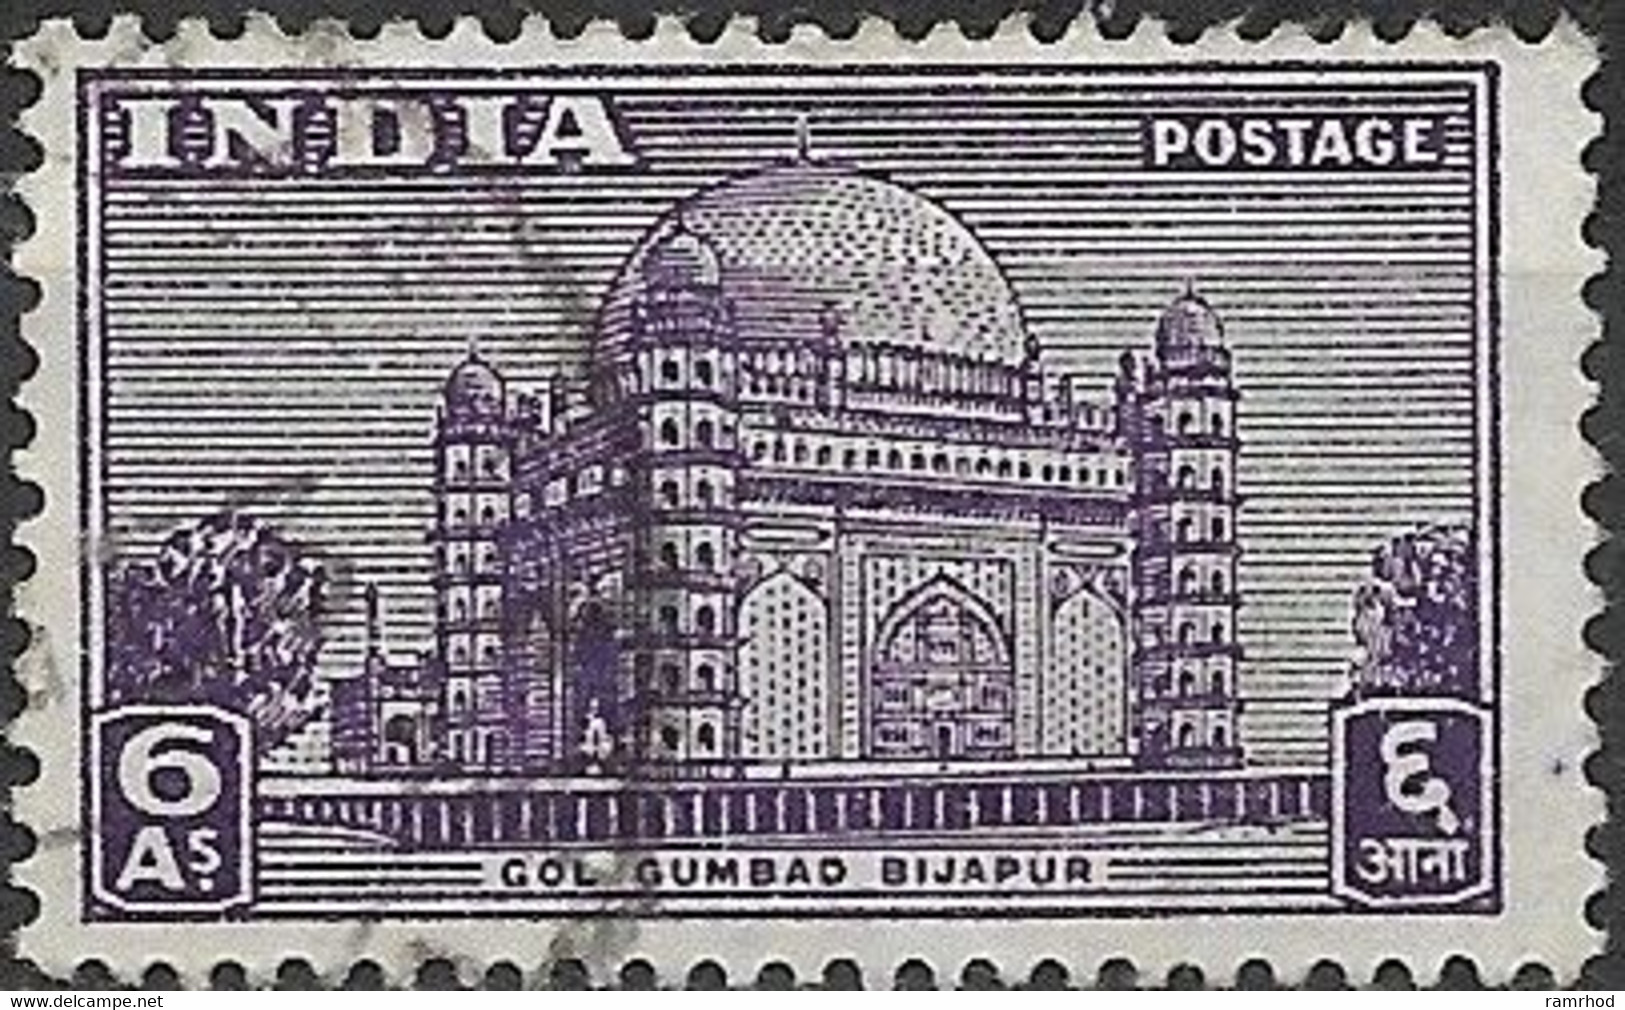 INDIA 1949 Gol Gumbad, Bijapur - 6a - Violet FU - Gebruikt